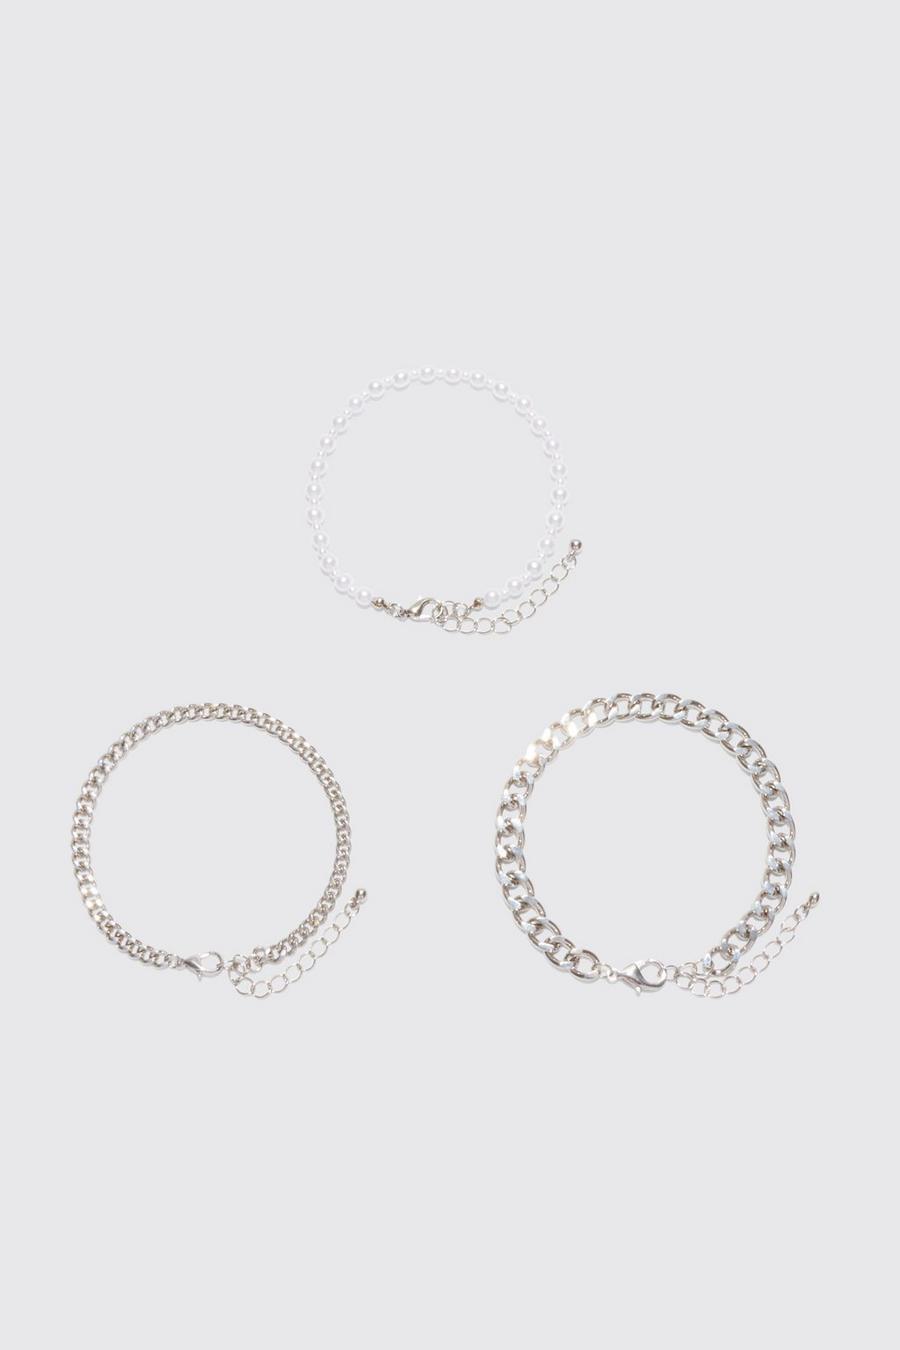 Silver argent Multi Layer Chain Bracelet